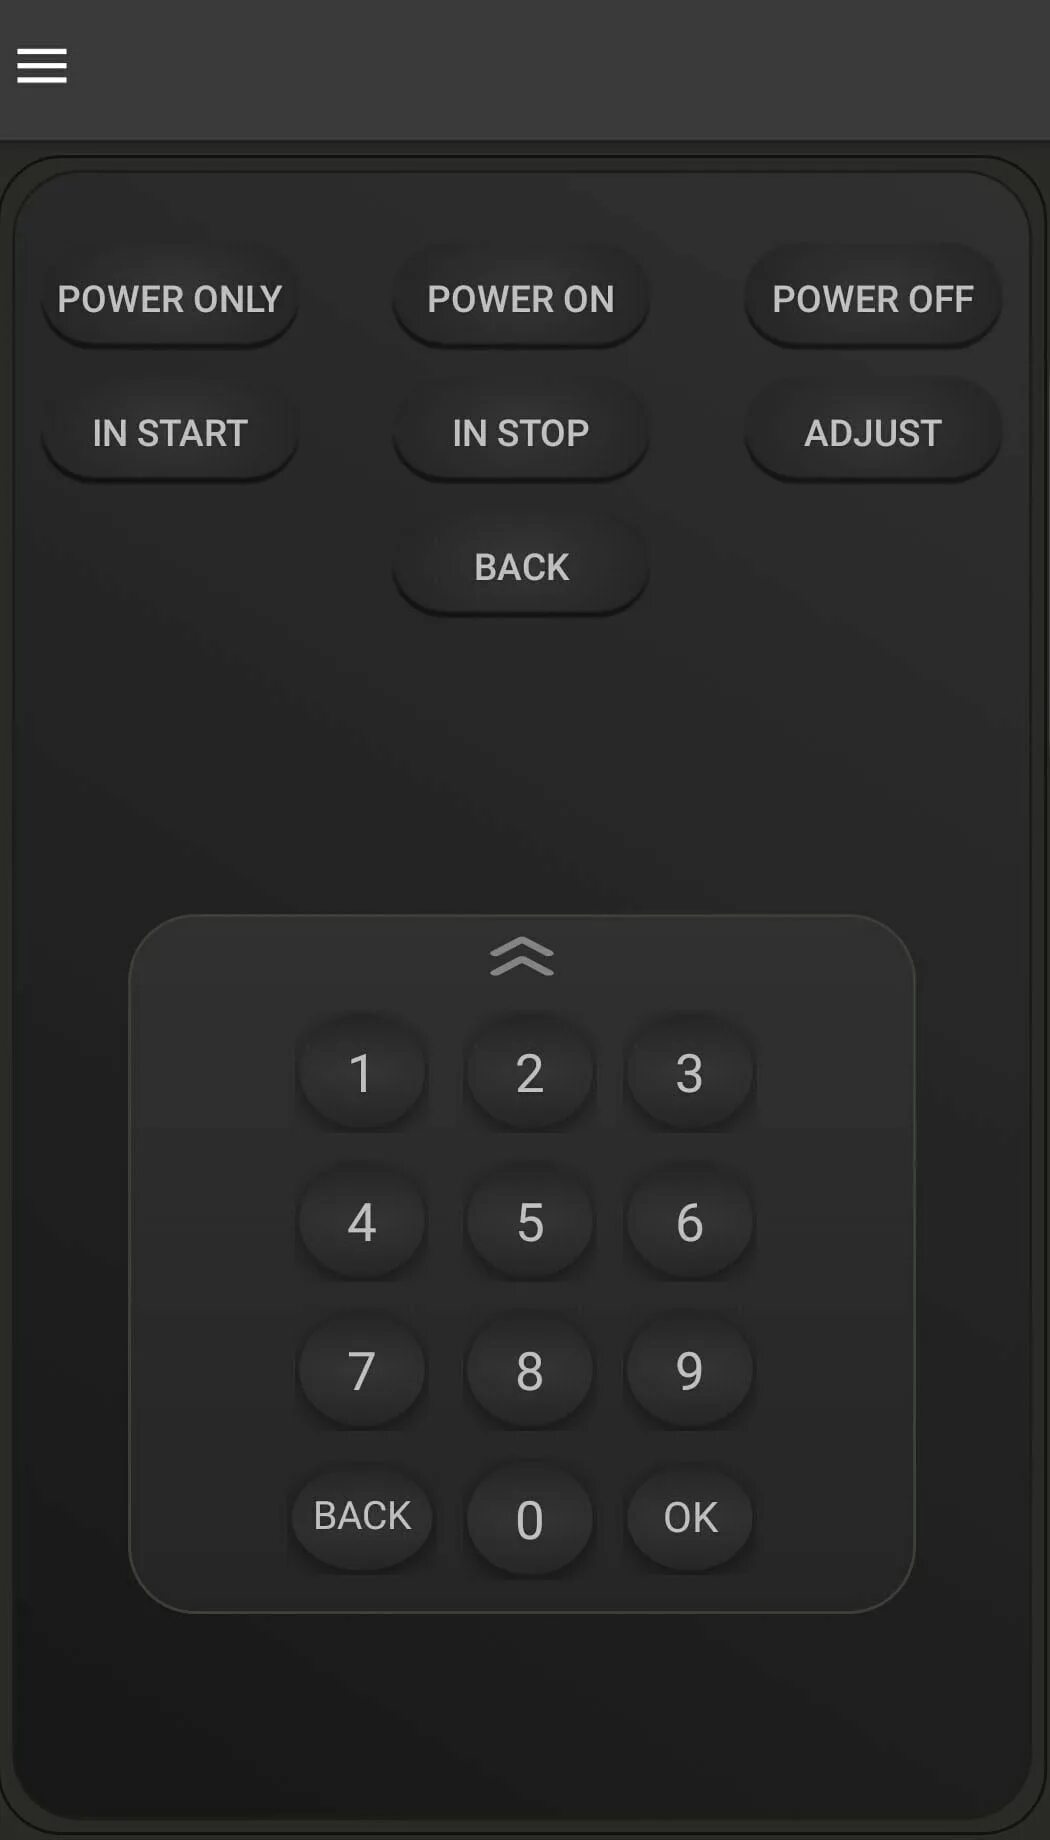 Tv remote service. LG Smart TV service Remote Control. Сервисный пульт для телевизора LG. LG сервисный пульт pic16. LG service Remote Control v220615.1.